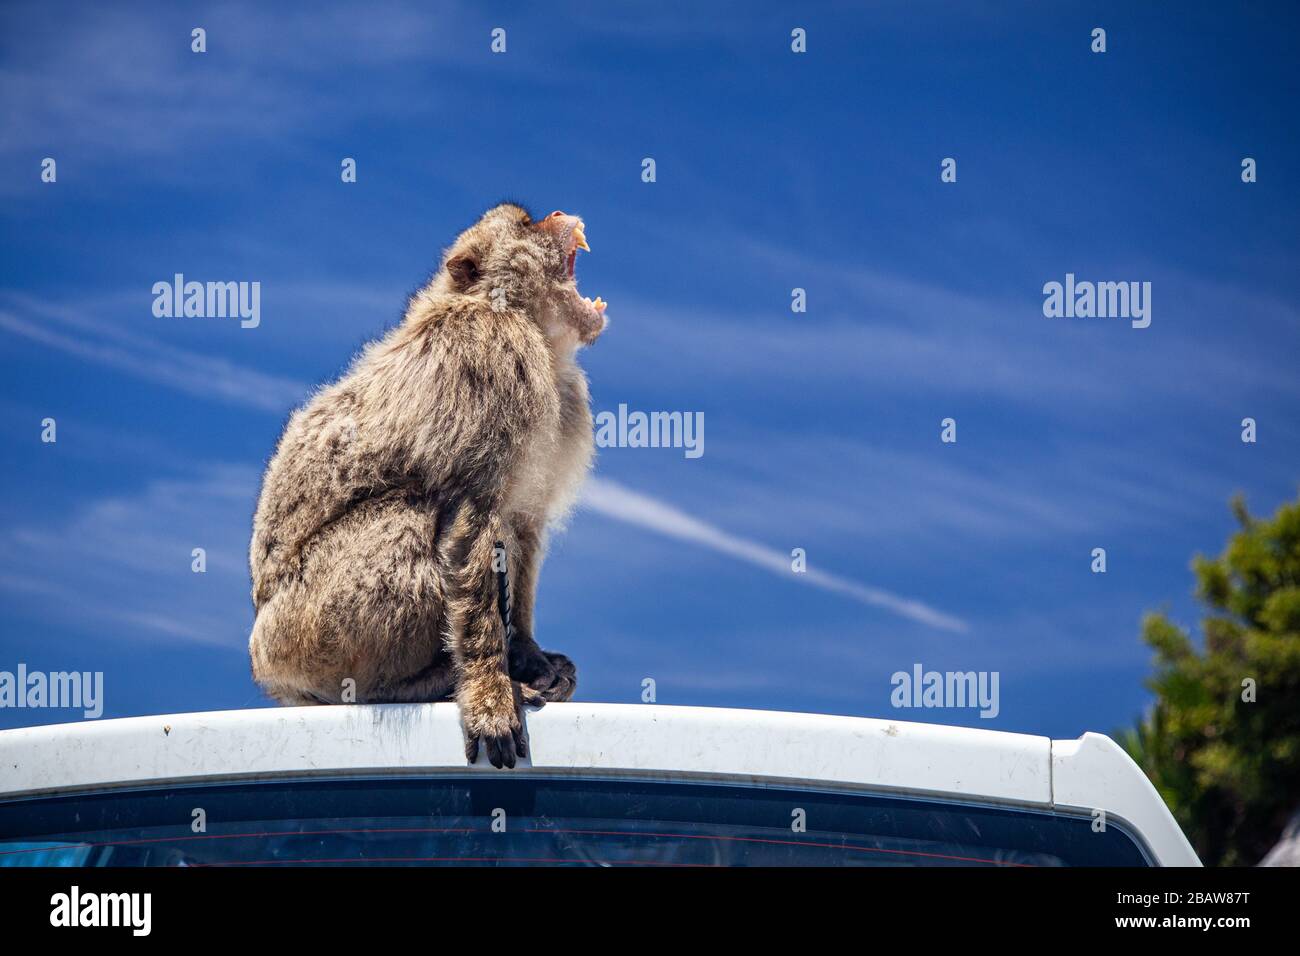 A barbary ape (Macaca sylvanus) at the Top of the Rock, Gibraltar Stock Photo